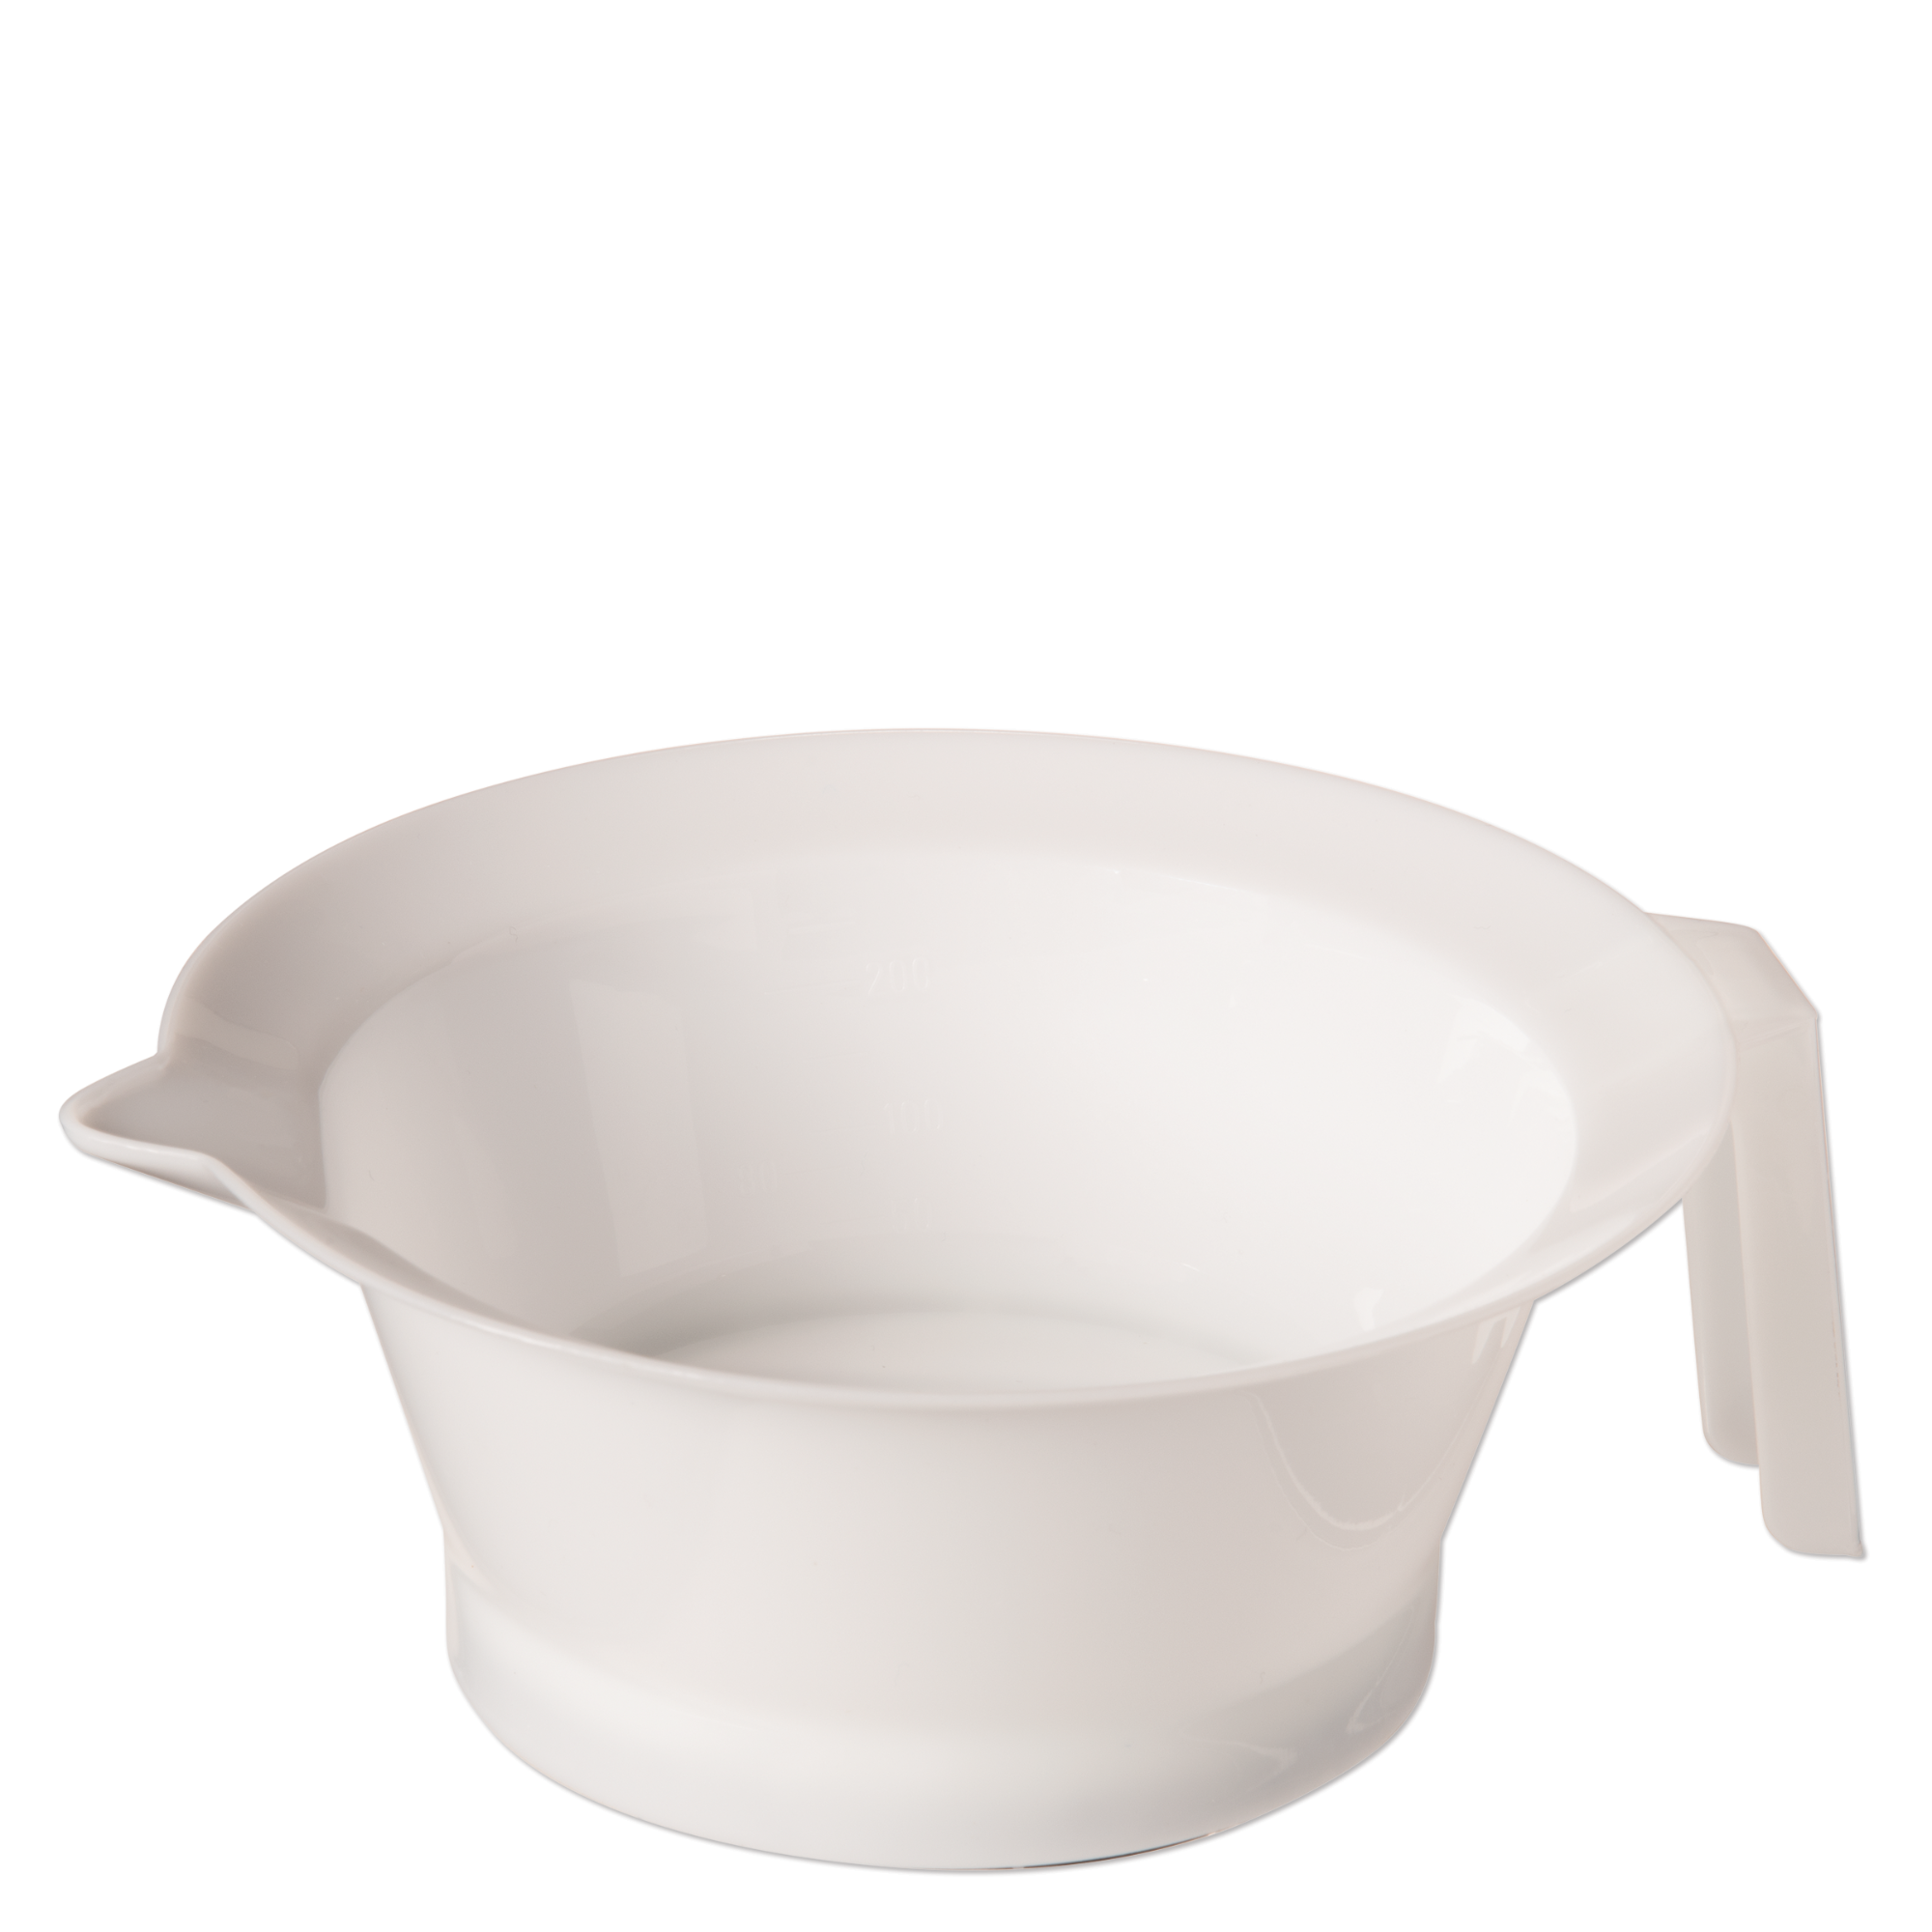 Classic Tint Bowl - White